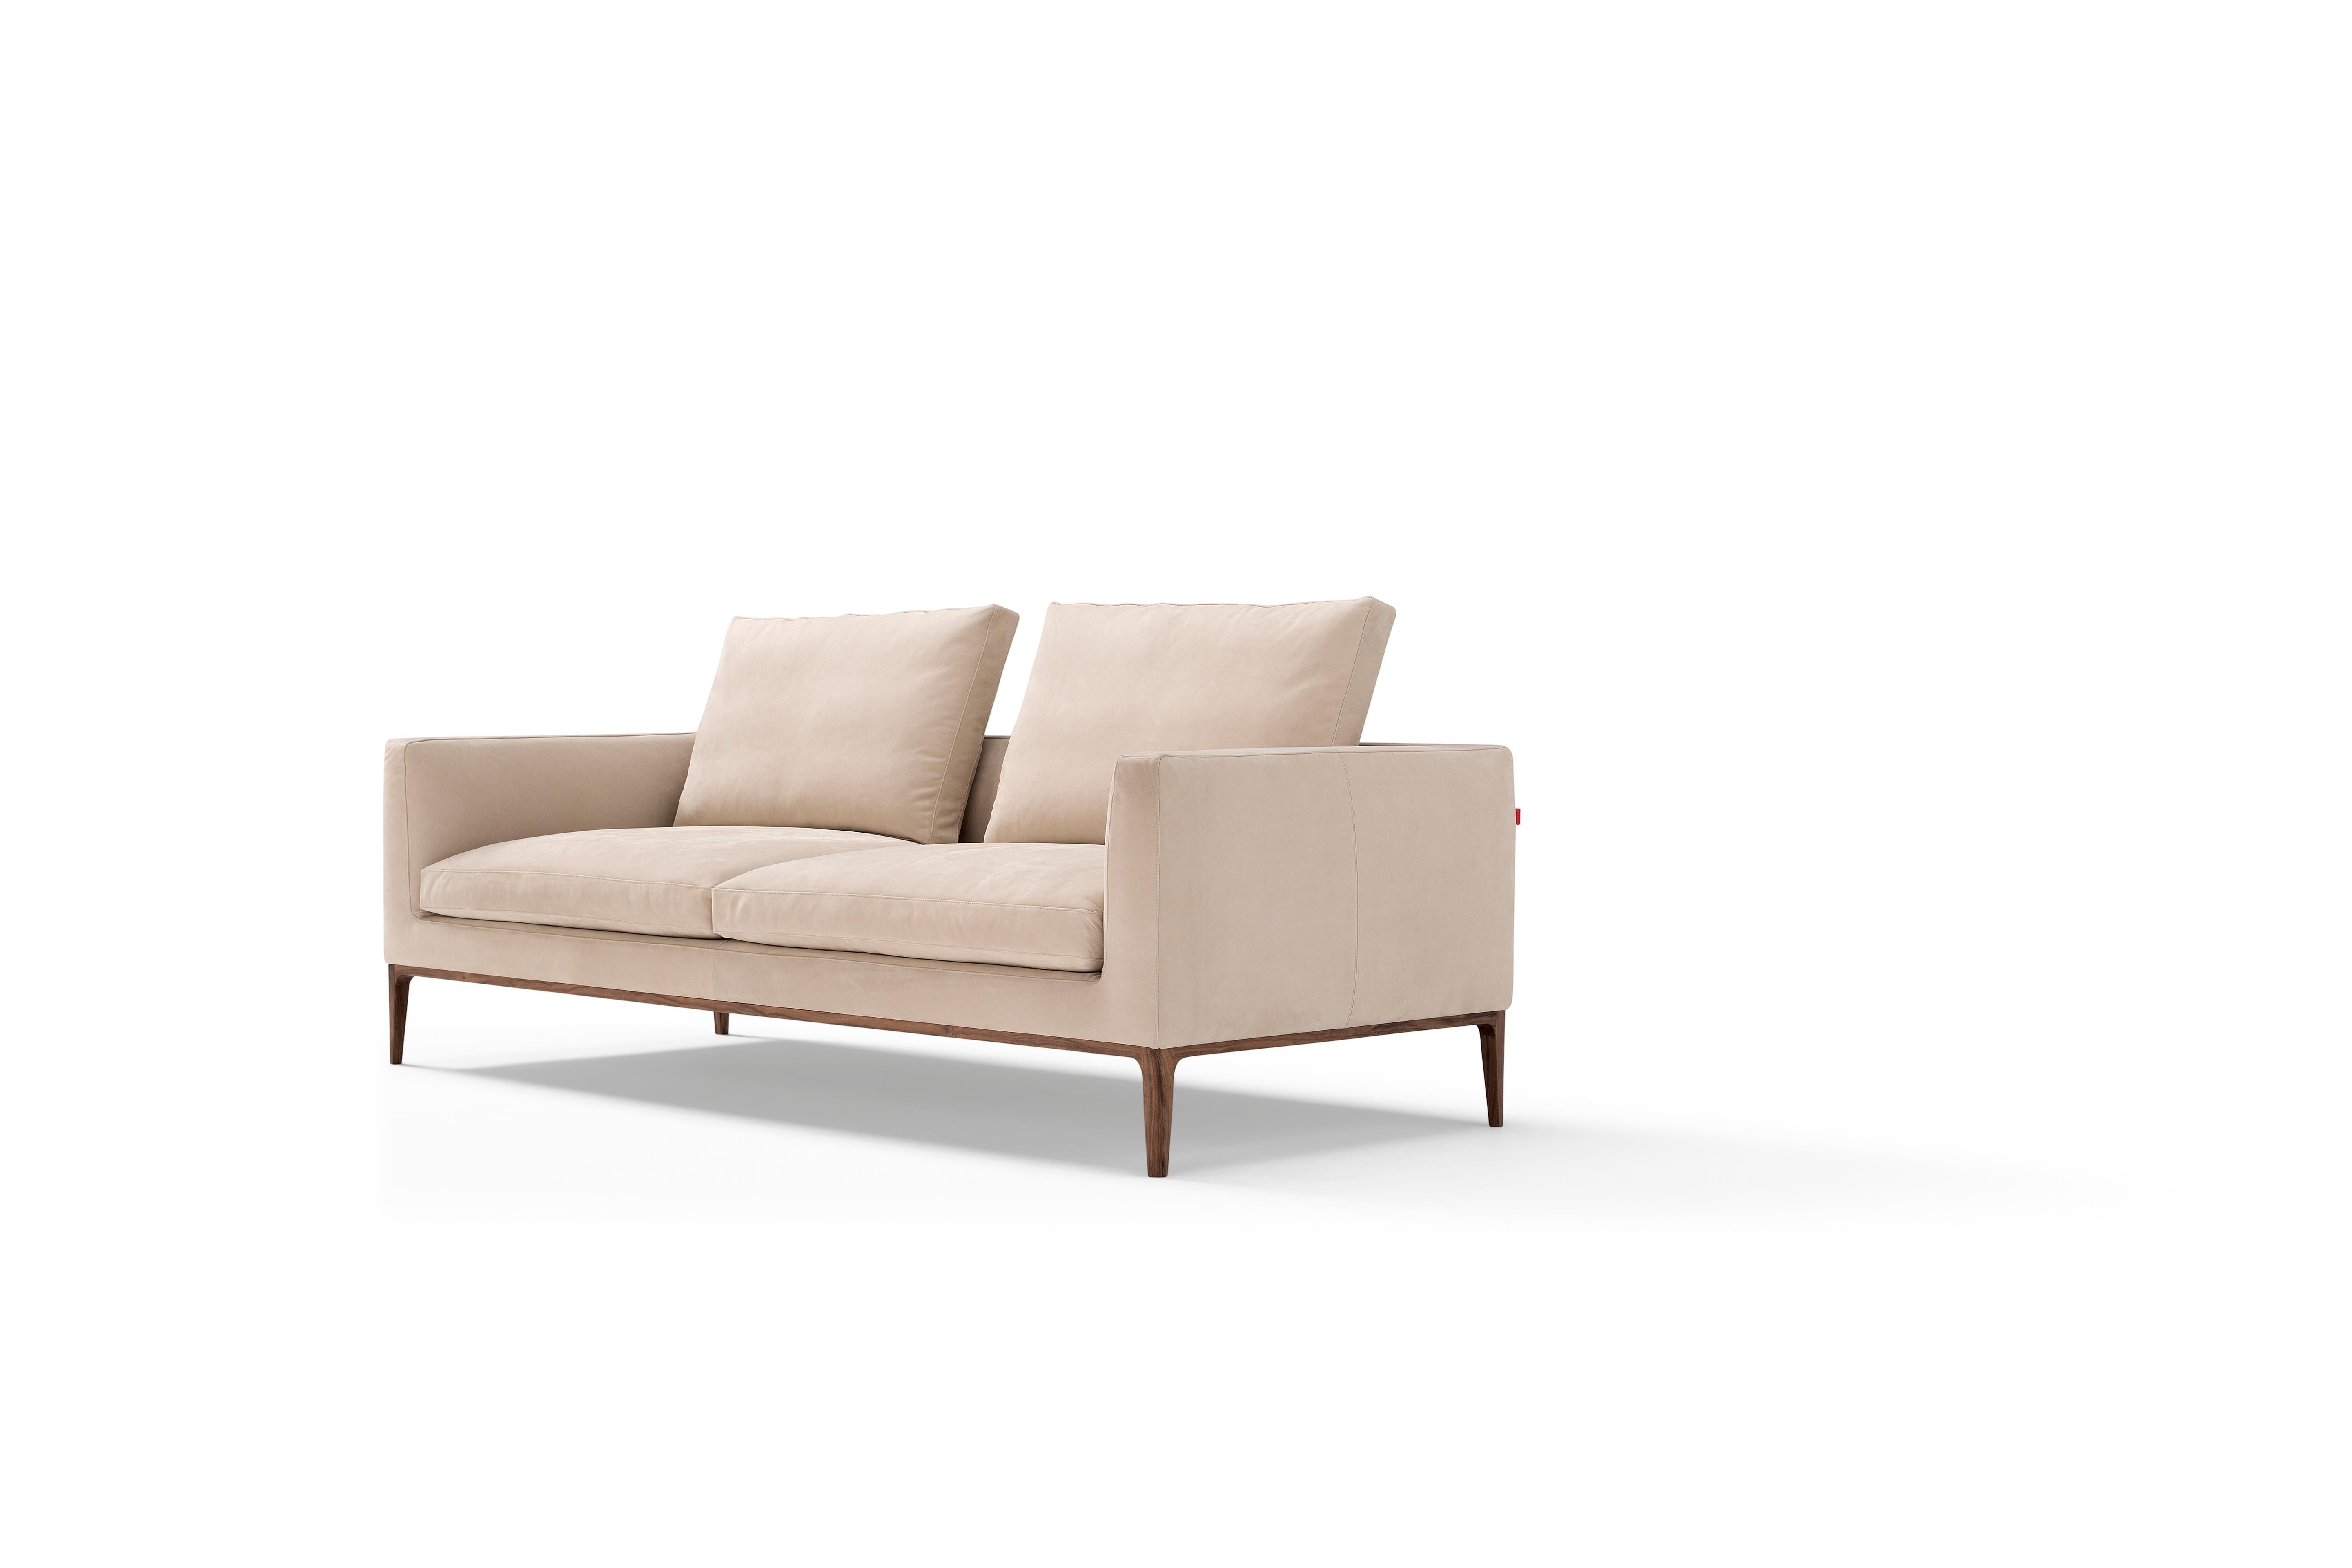 Italian Amura 'Leonard' 2-Seat Sofa in Cream Leather and Wood Legs by Emanuel Gargano For Sale